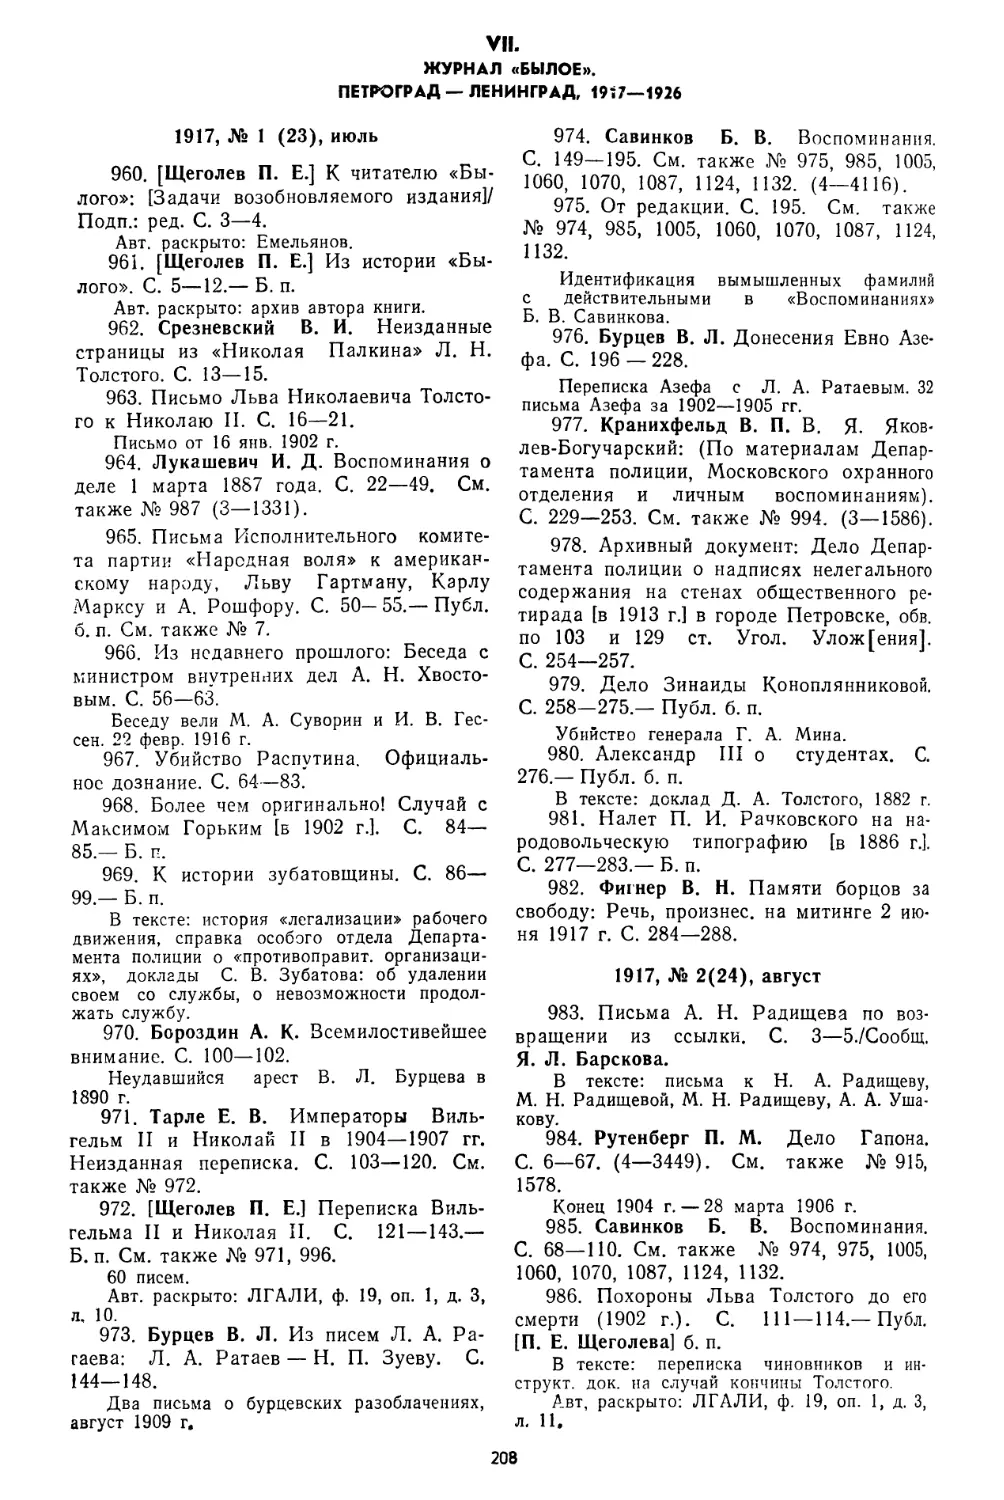 VII. Журнал «Былое». Петроград — Ленинград, 1917—1926, № 960—1467